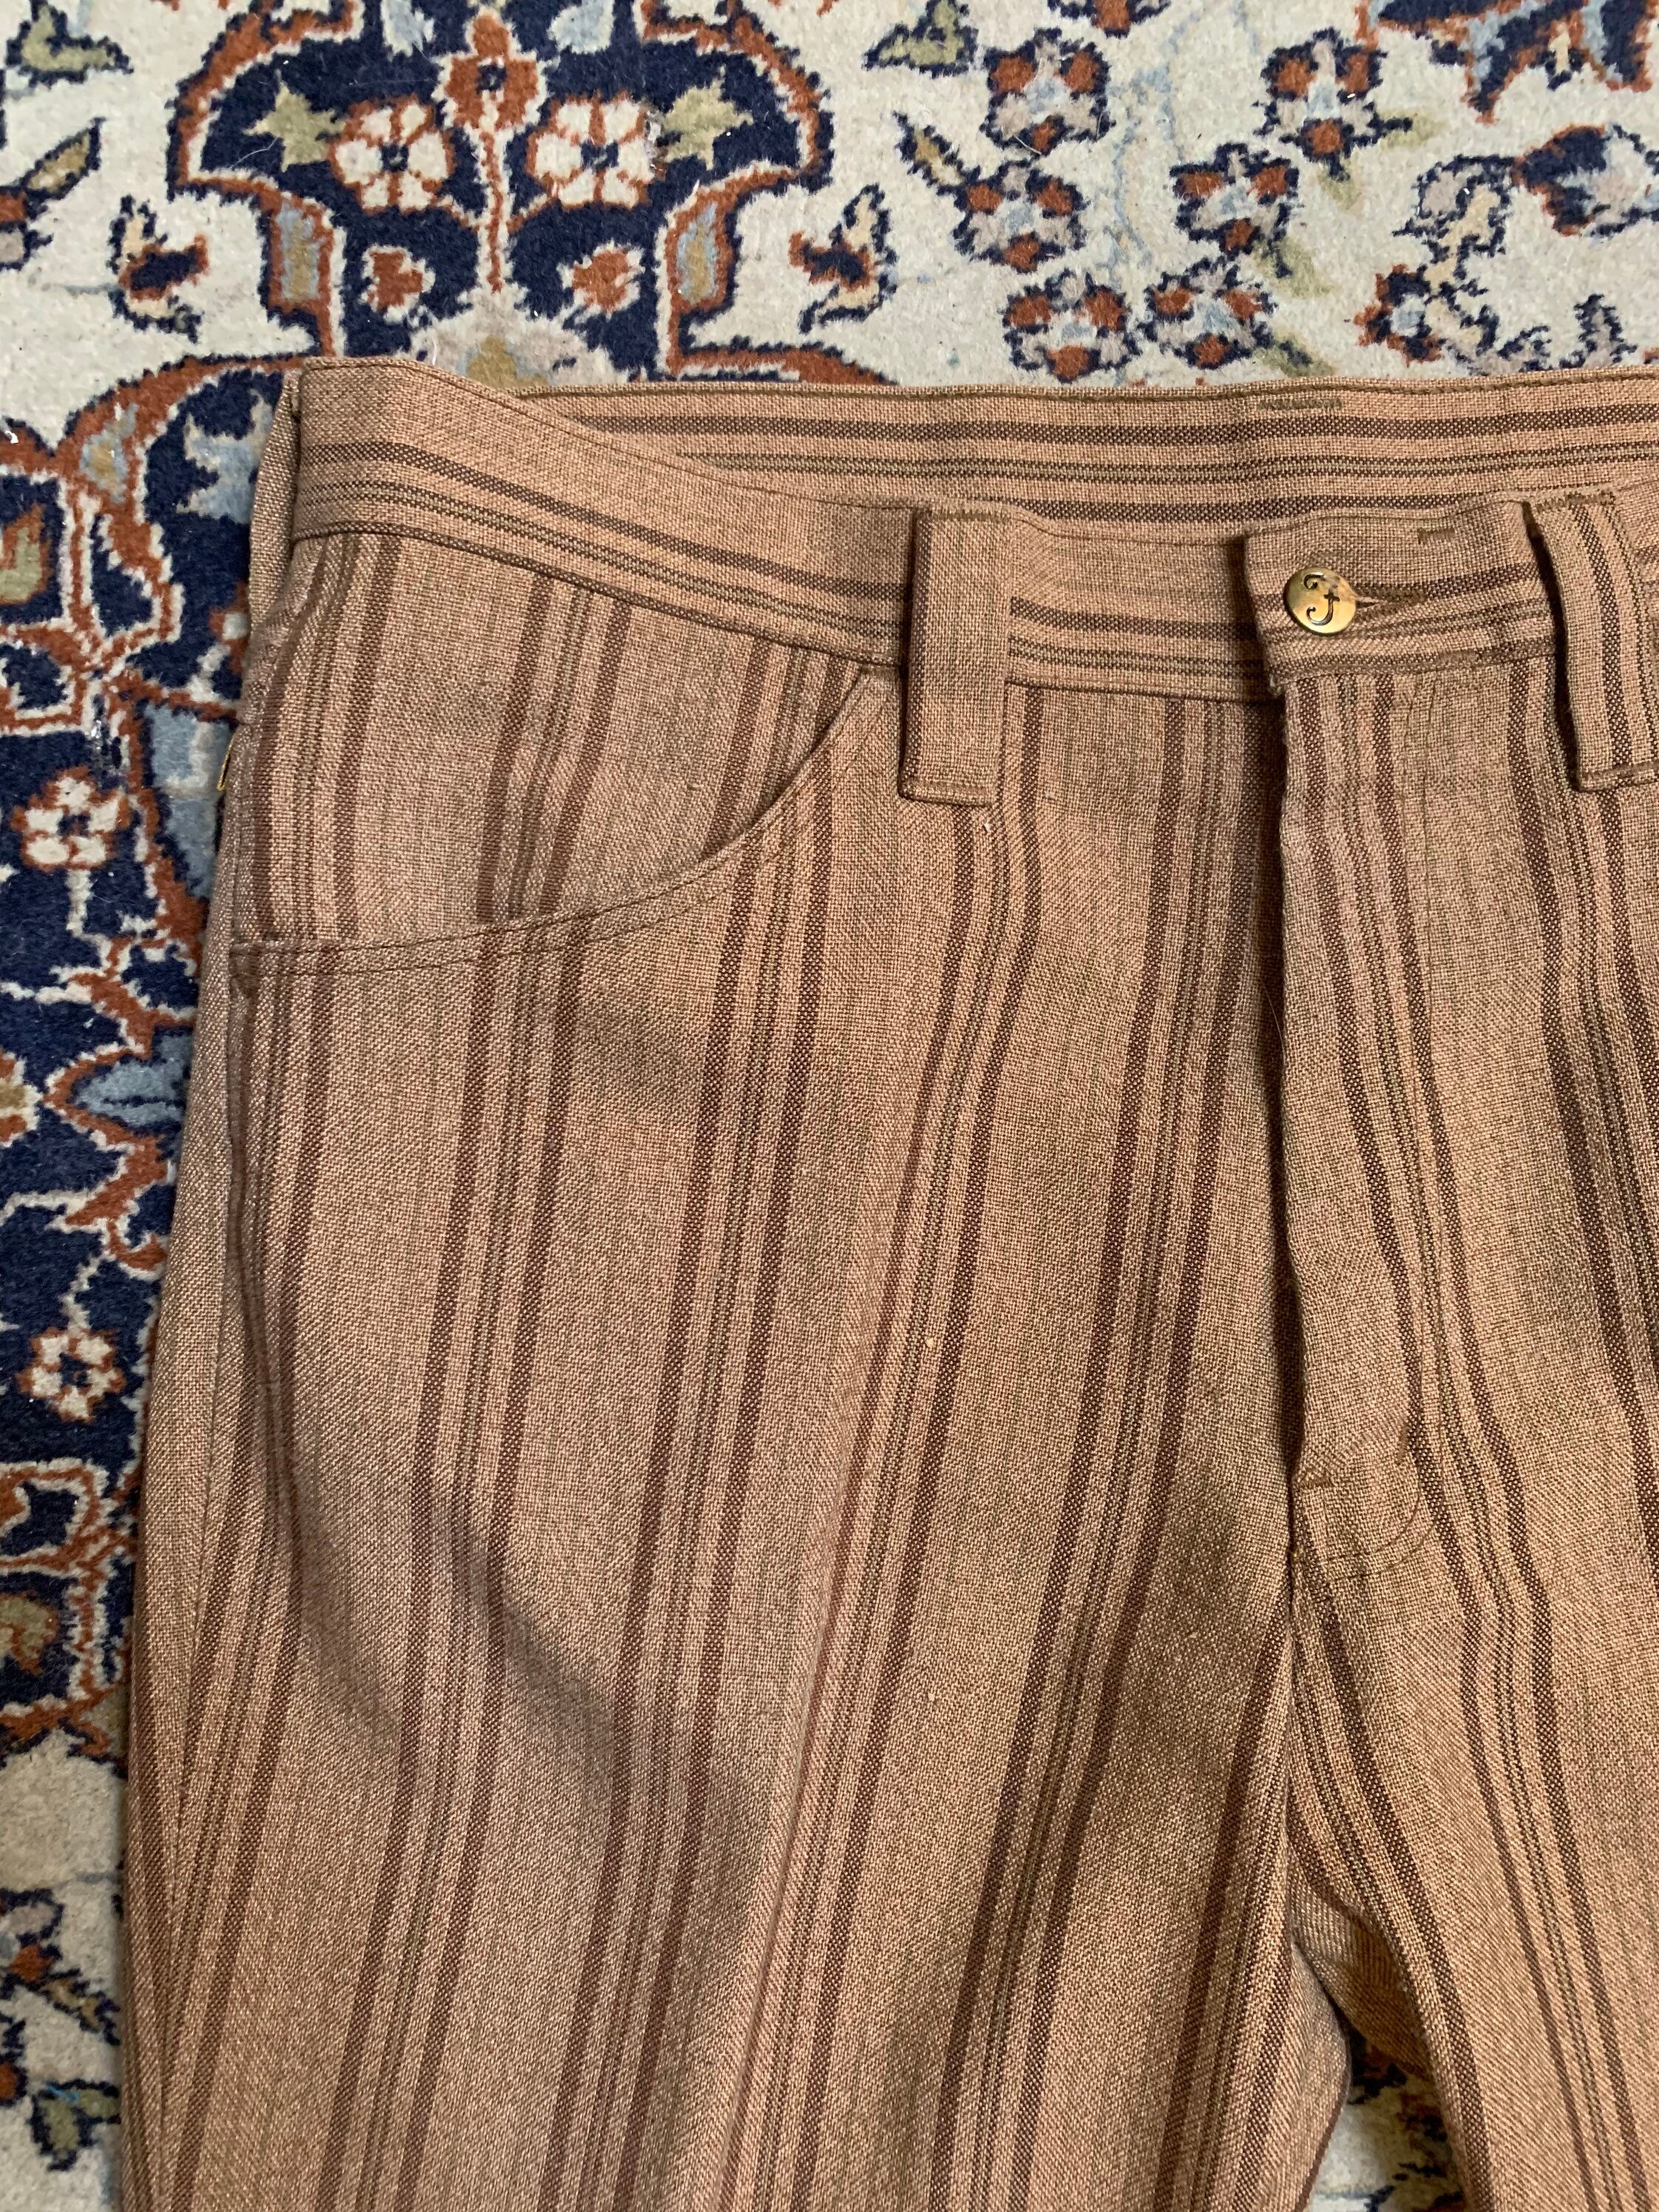 Cute 1980s era Farah striped pants in brown | Etsy